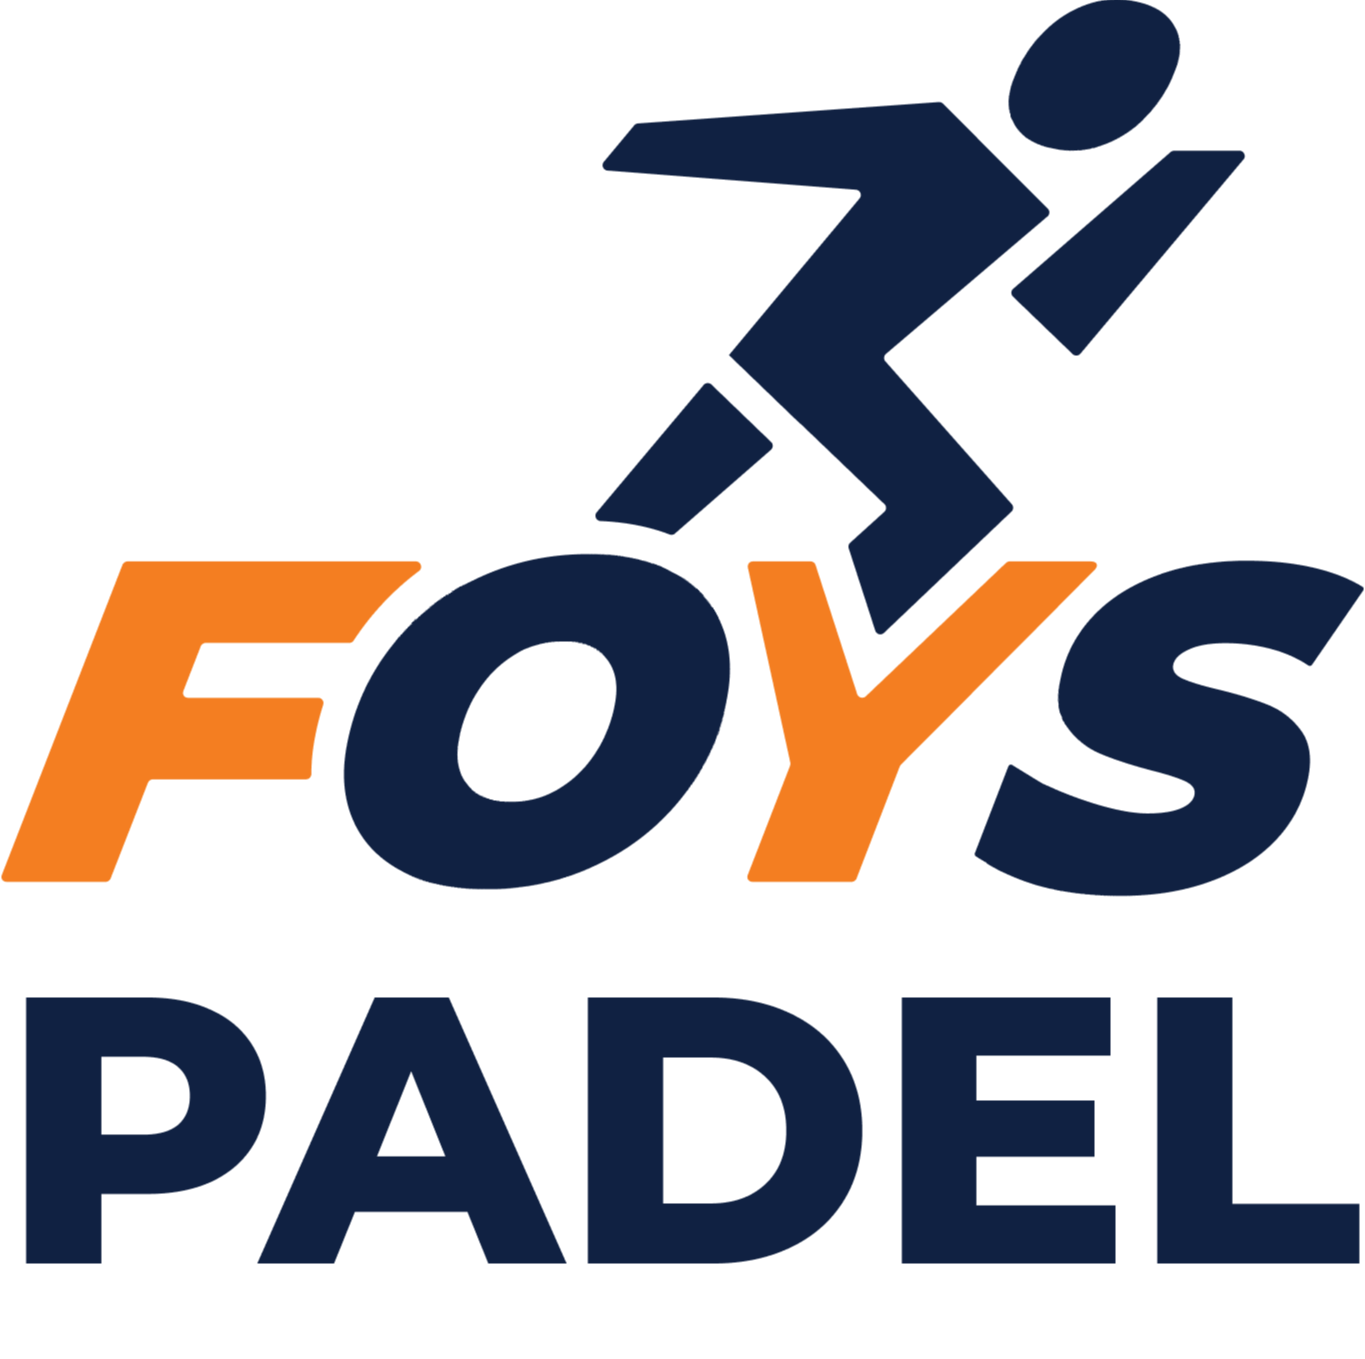 Logo FOYS